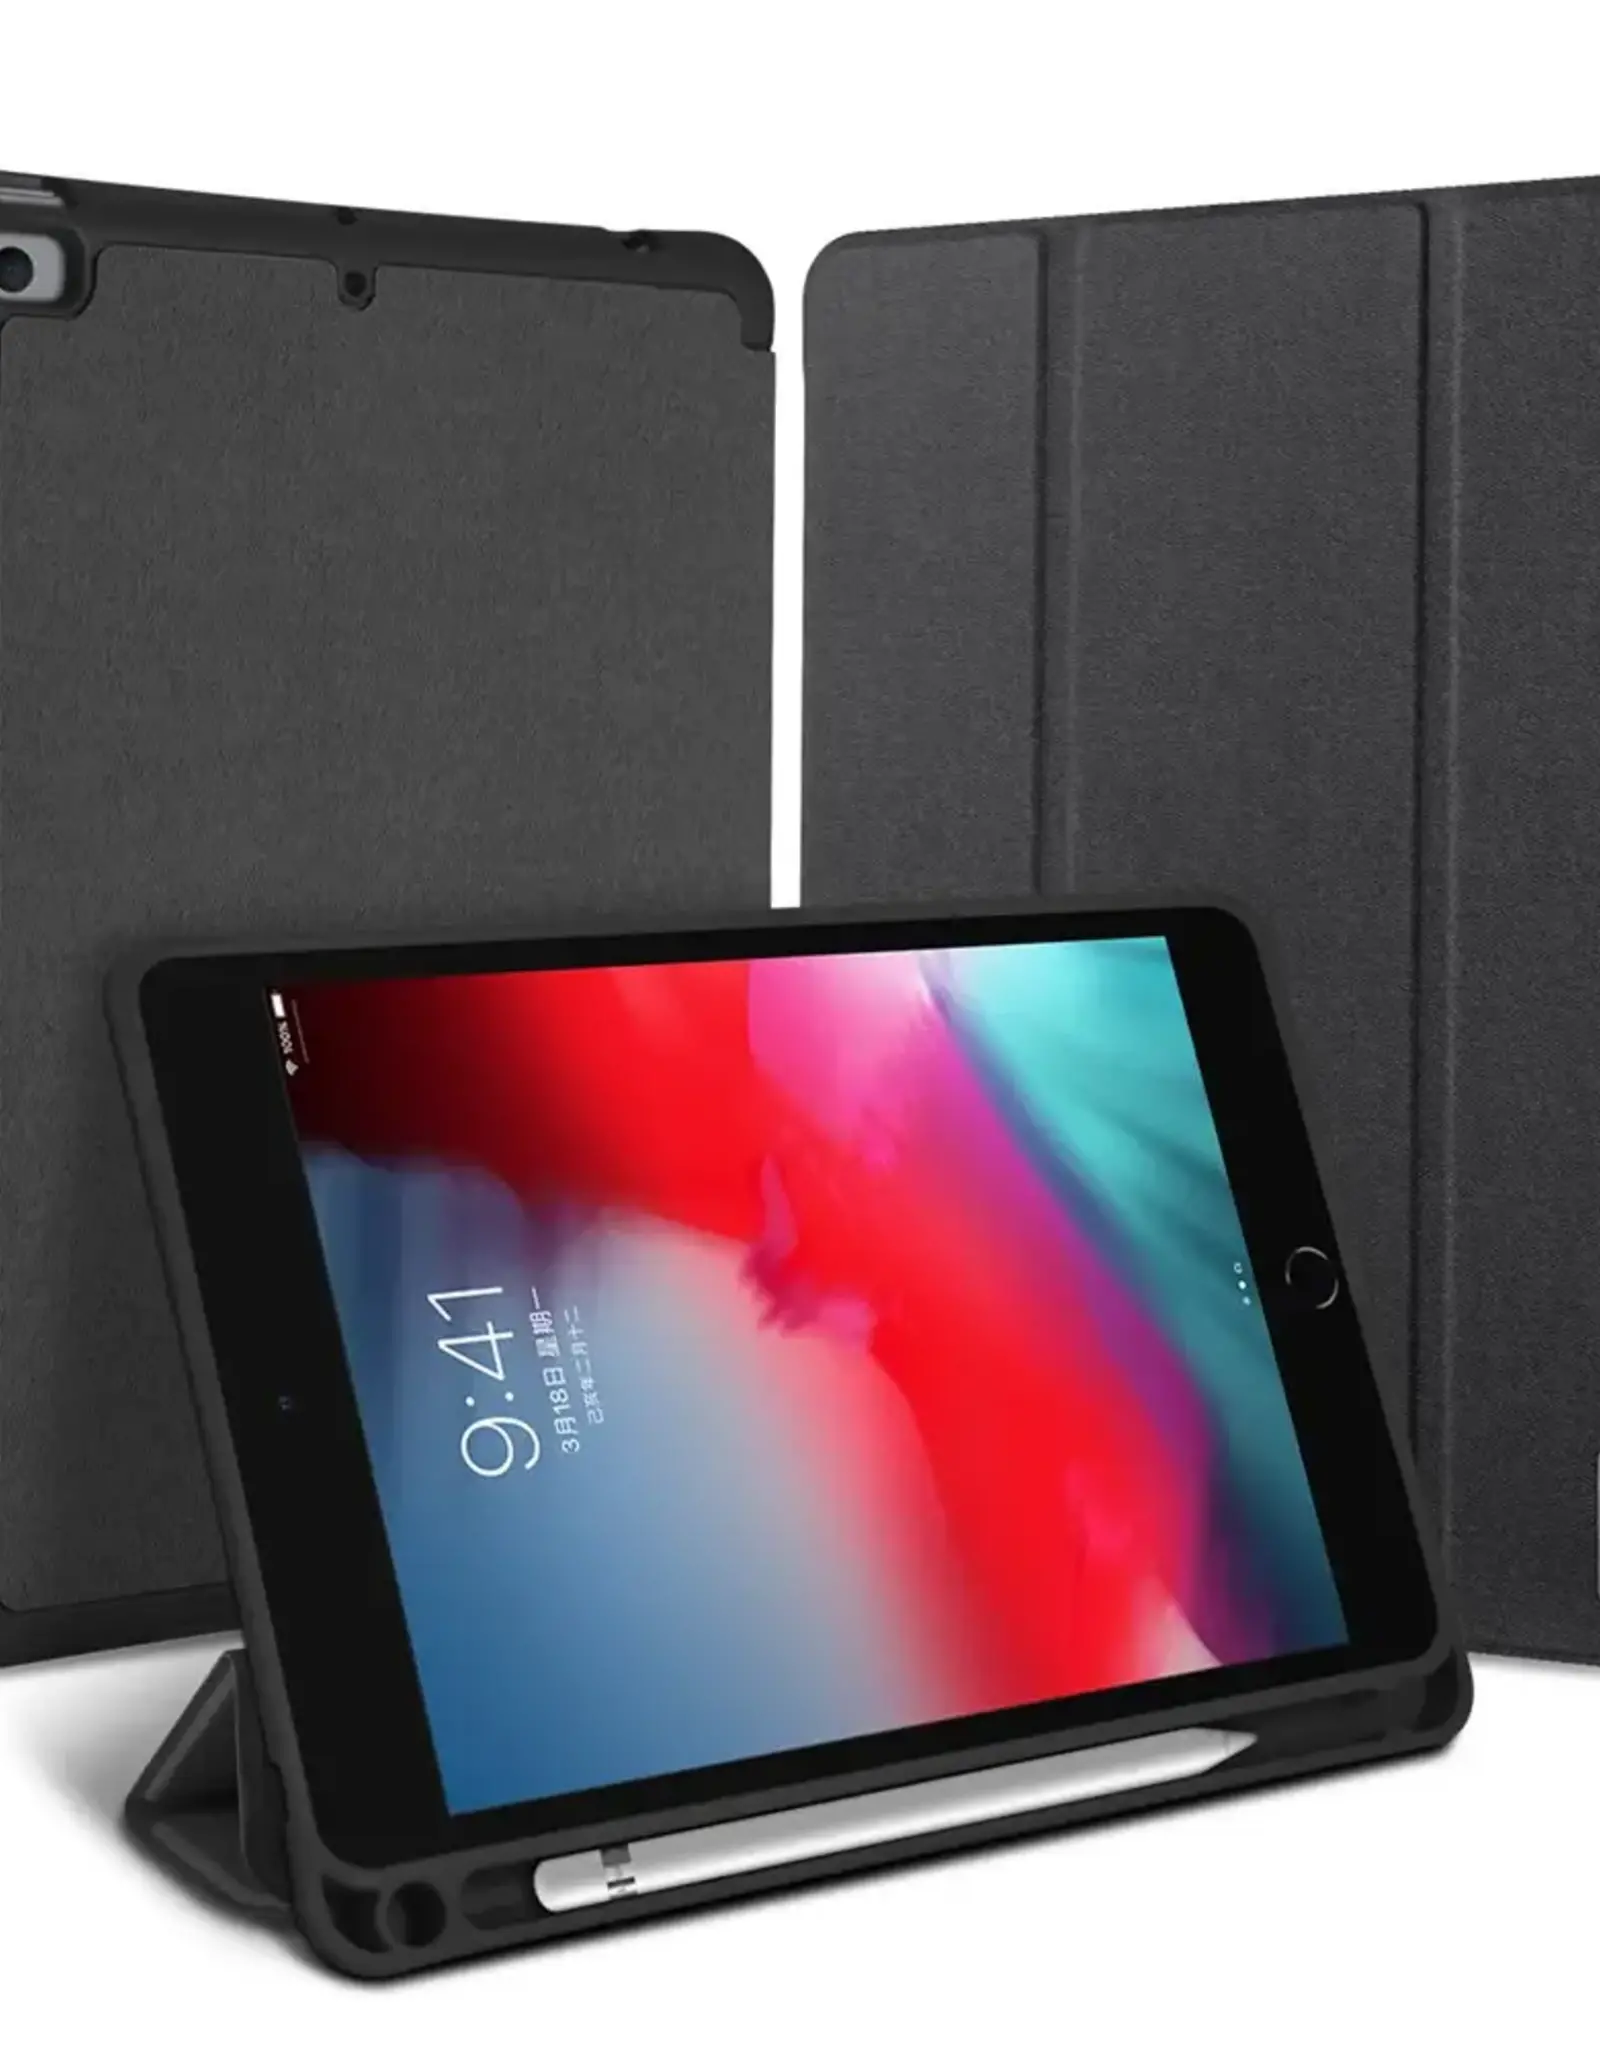 iPad Mini 4/5 DOMO Series Flip Case Black